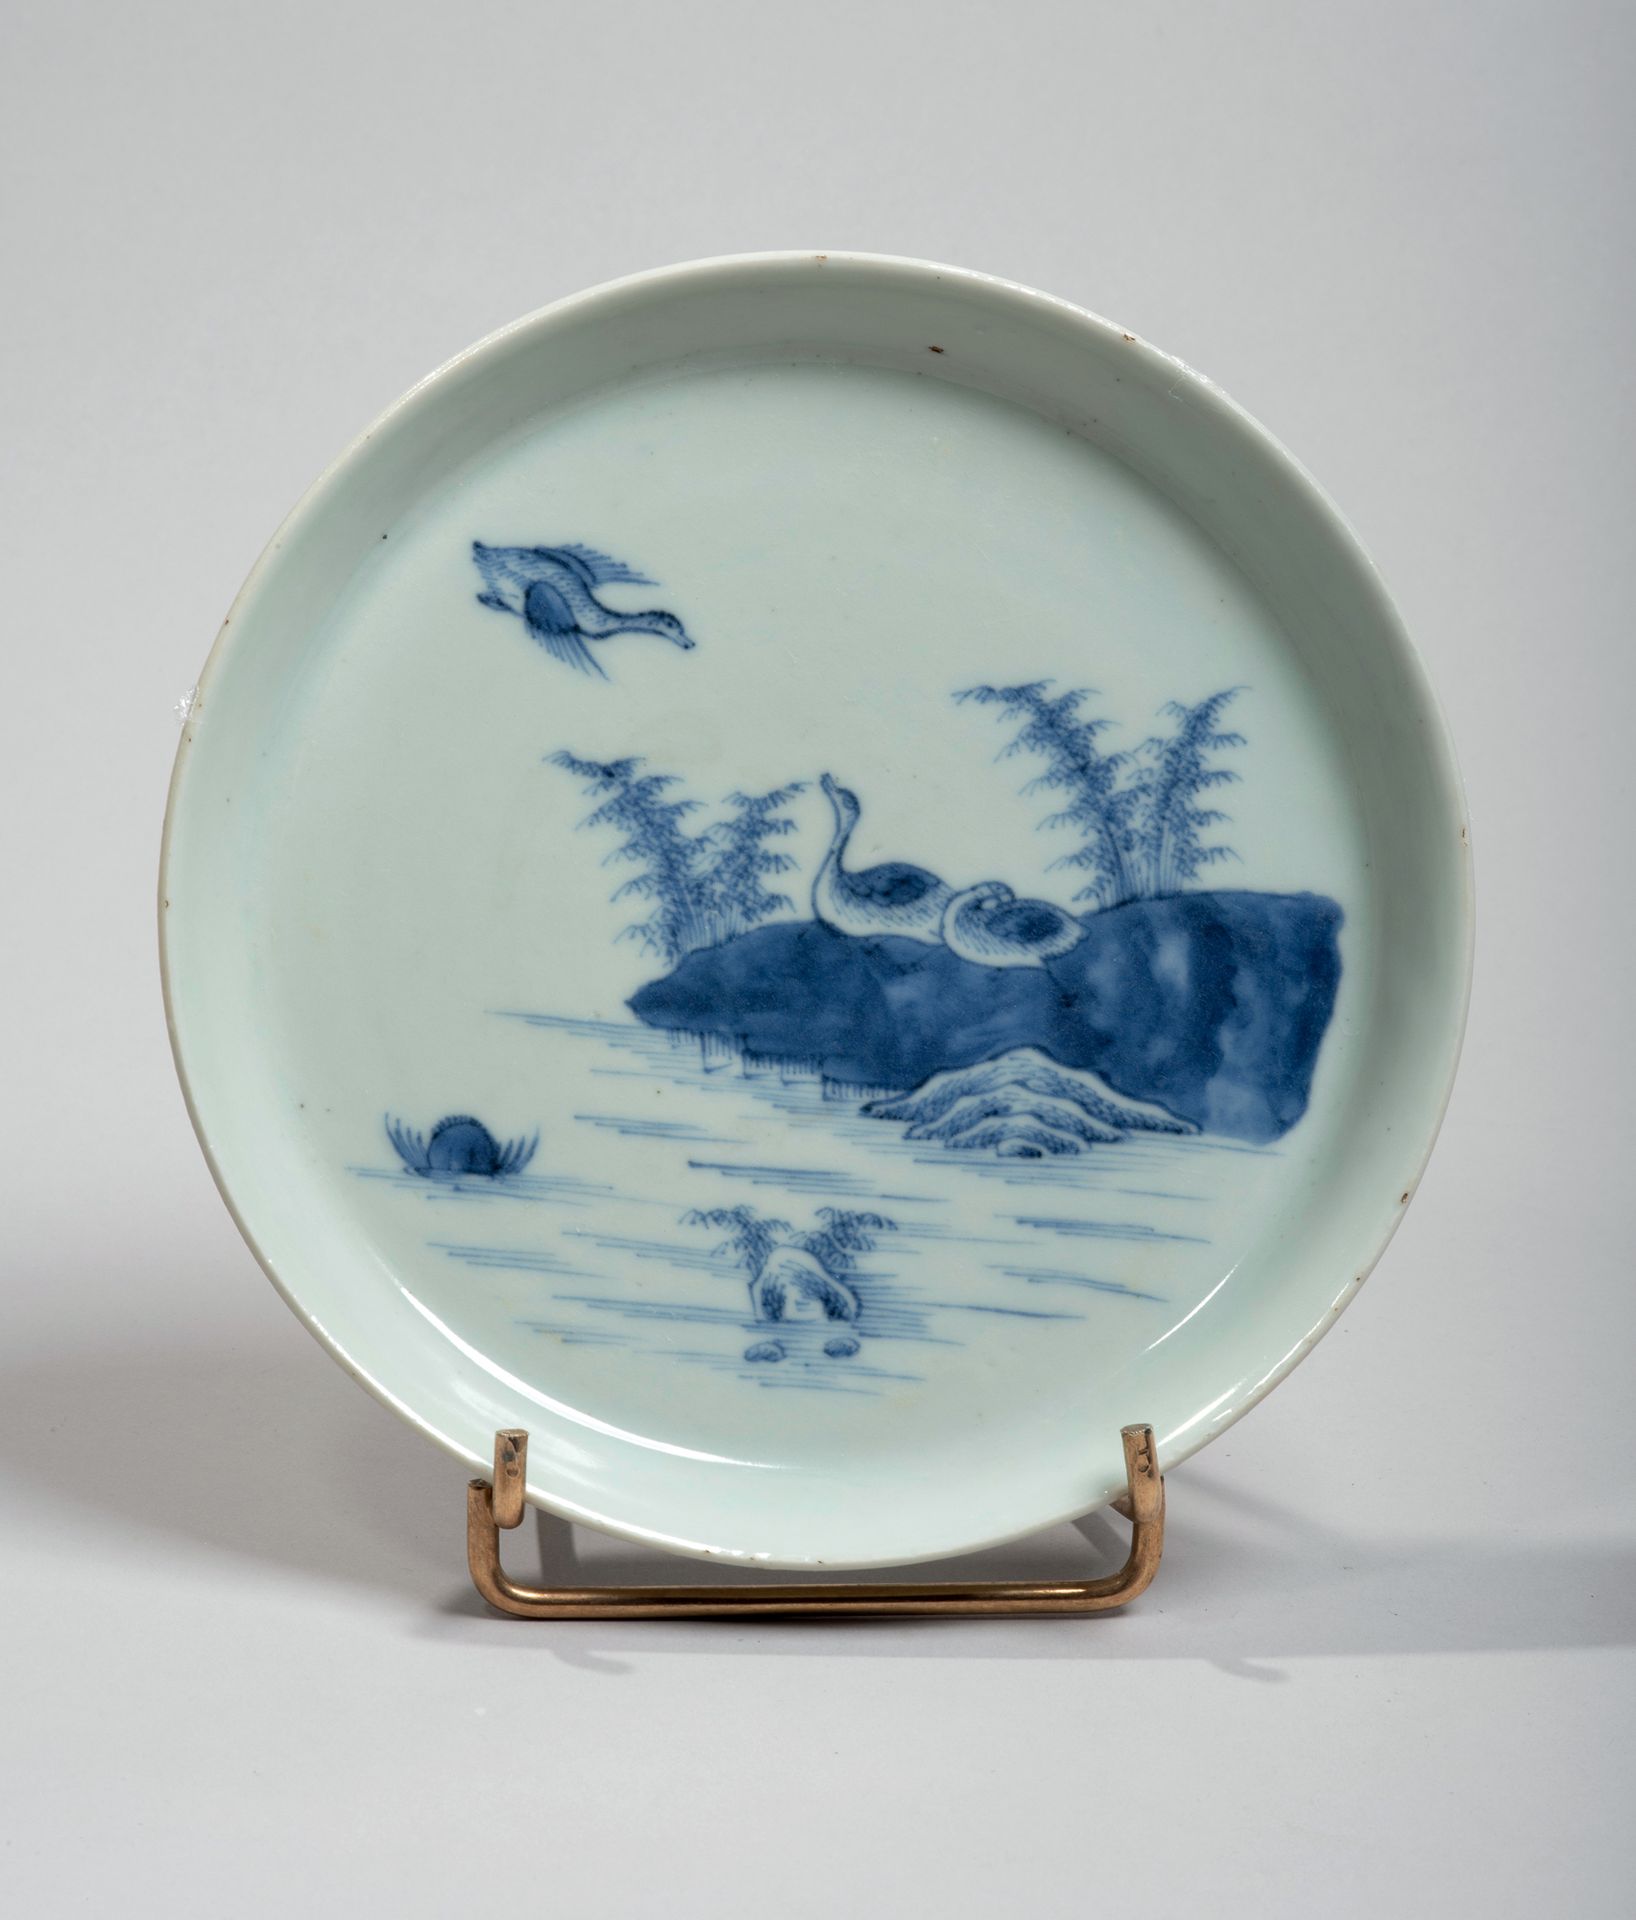 VIETNAM, Hue - XVIIIe siècle 
瓷碗，釉里红装饰着一对靠近河岸的鸭子。背面有chính ngoc（真玉）标记。直径16.3厘米